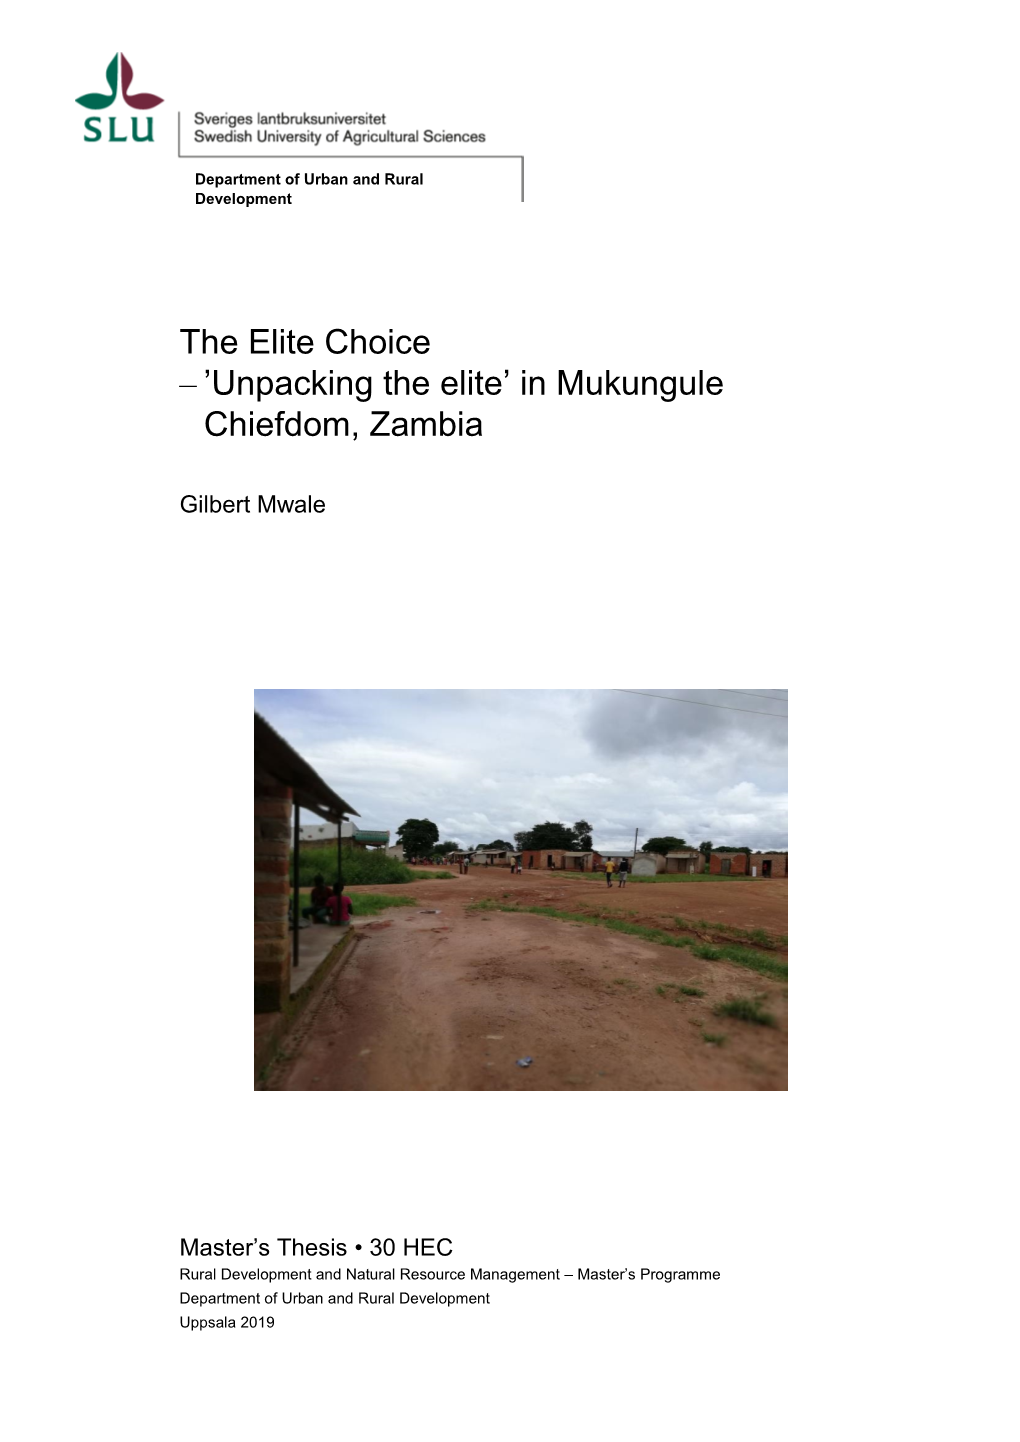 In Mukungule Chiefdom, Zambia